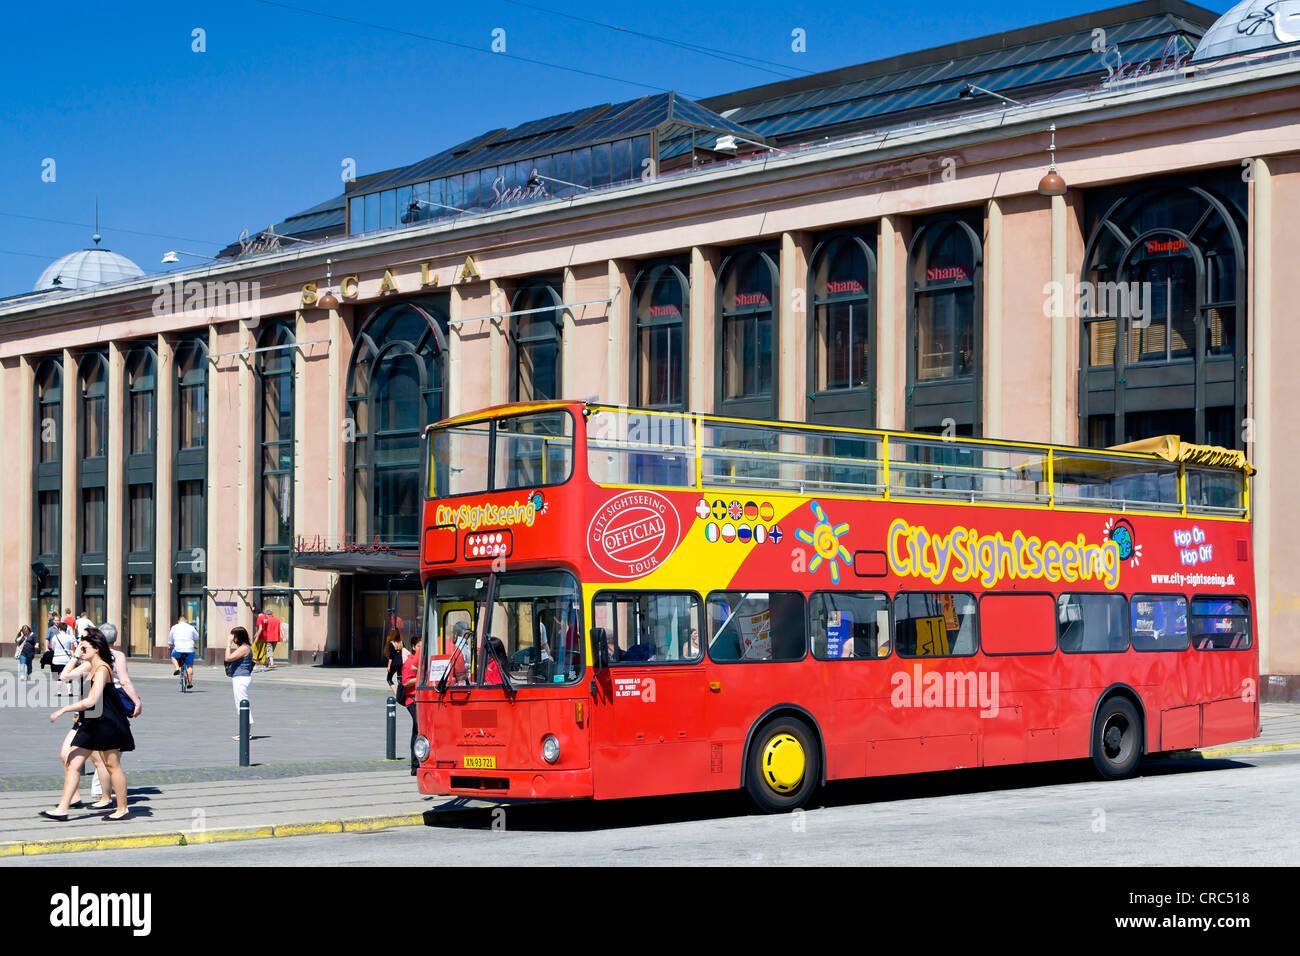 The Copenhagen sightseeing bus in front of the old Scala building, Copenhagen, Denmark, Europe Stock Photo